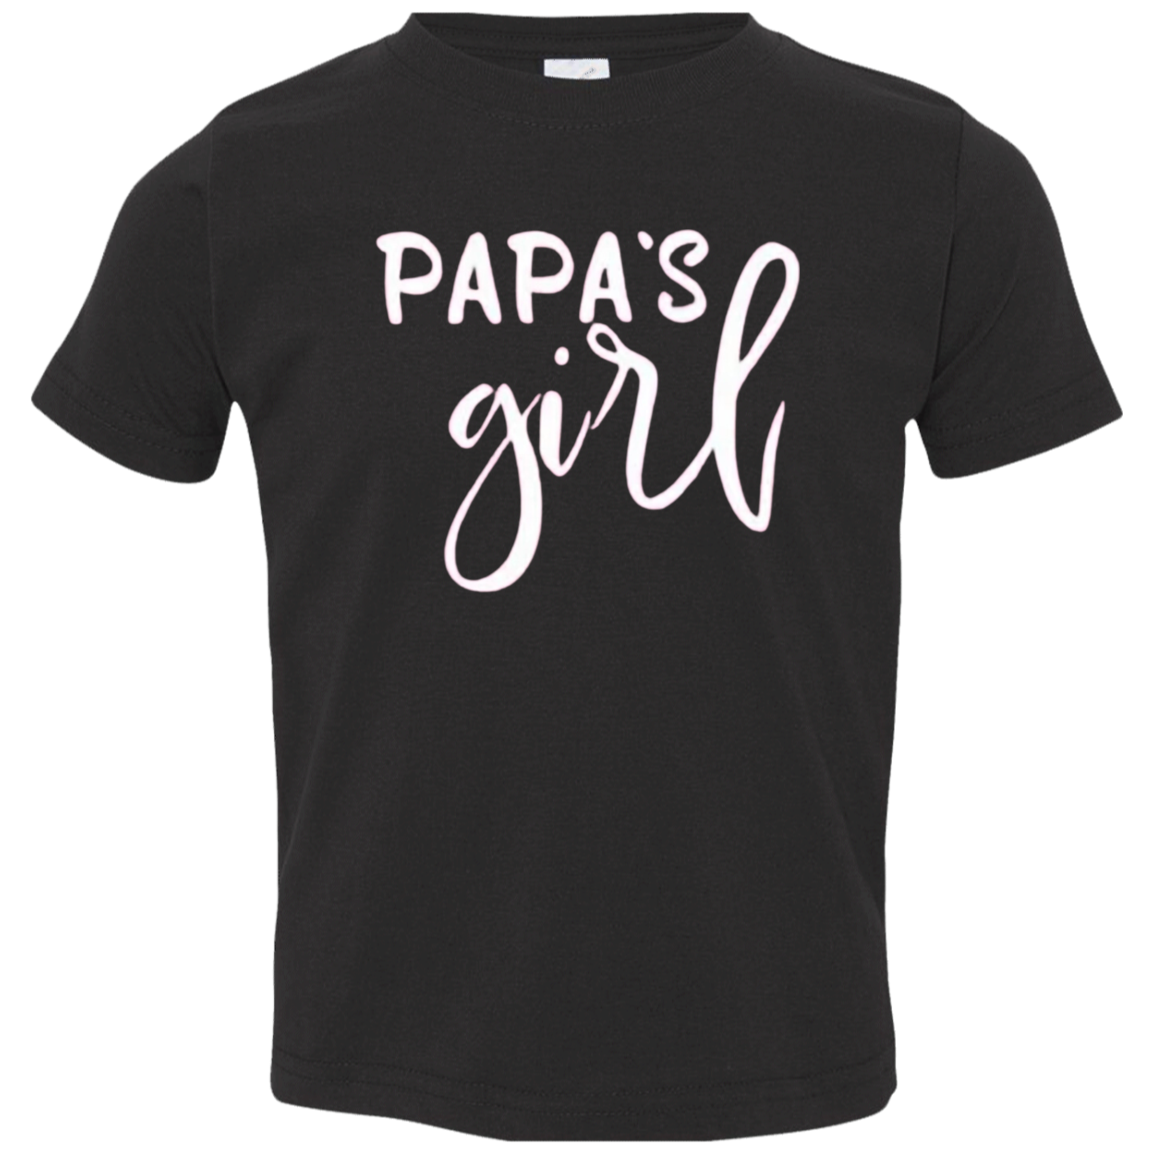 Papa's Girl! Tee